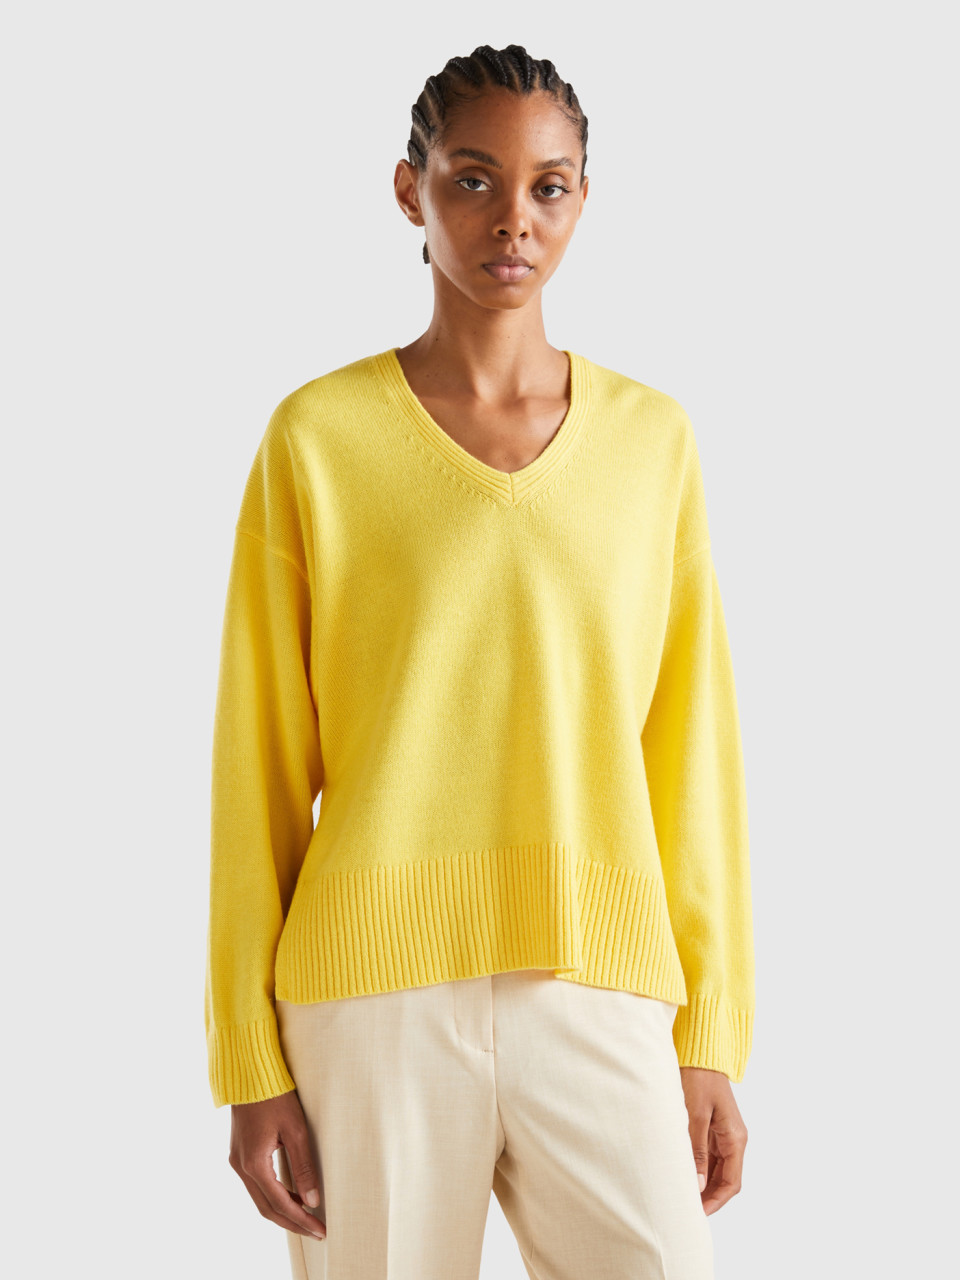 Benetton, Oversized Fit V-neck Sweater, Yellow, Women